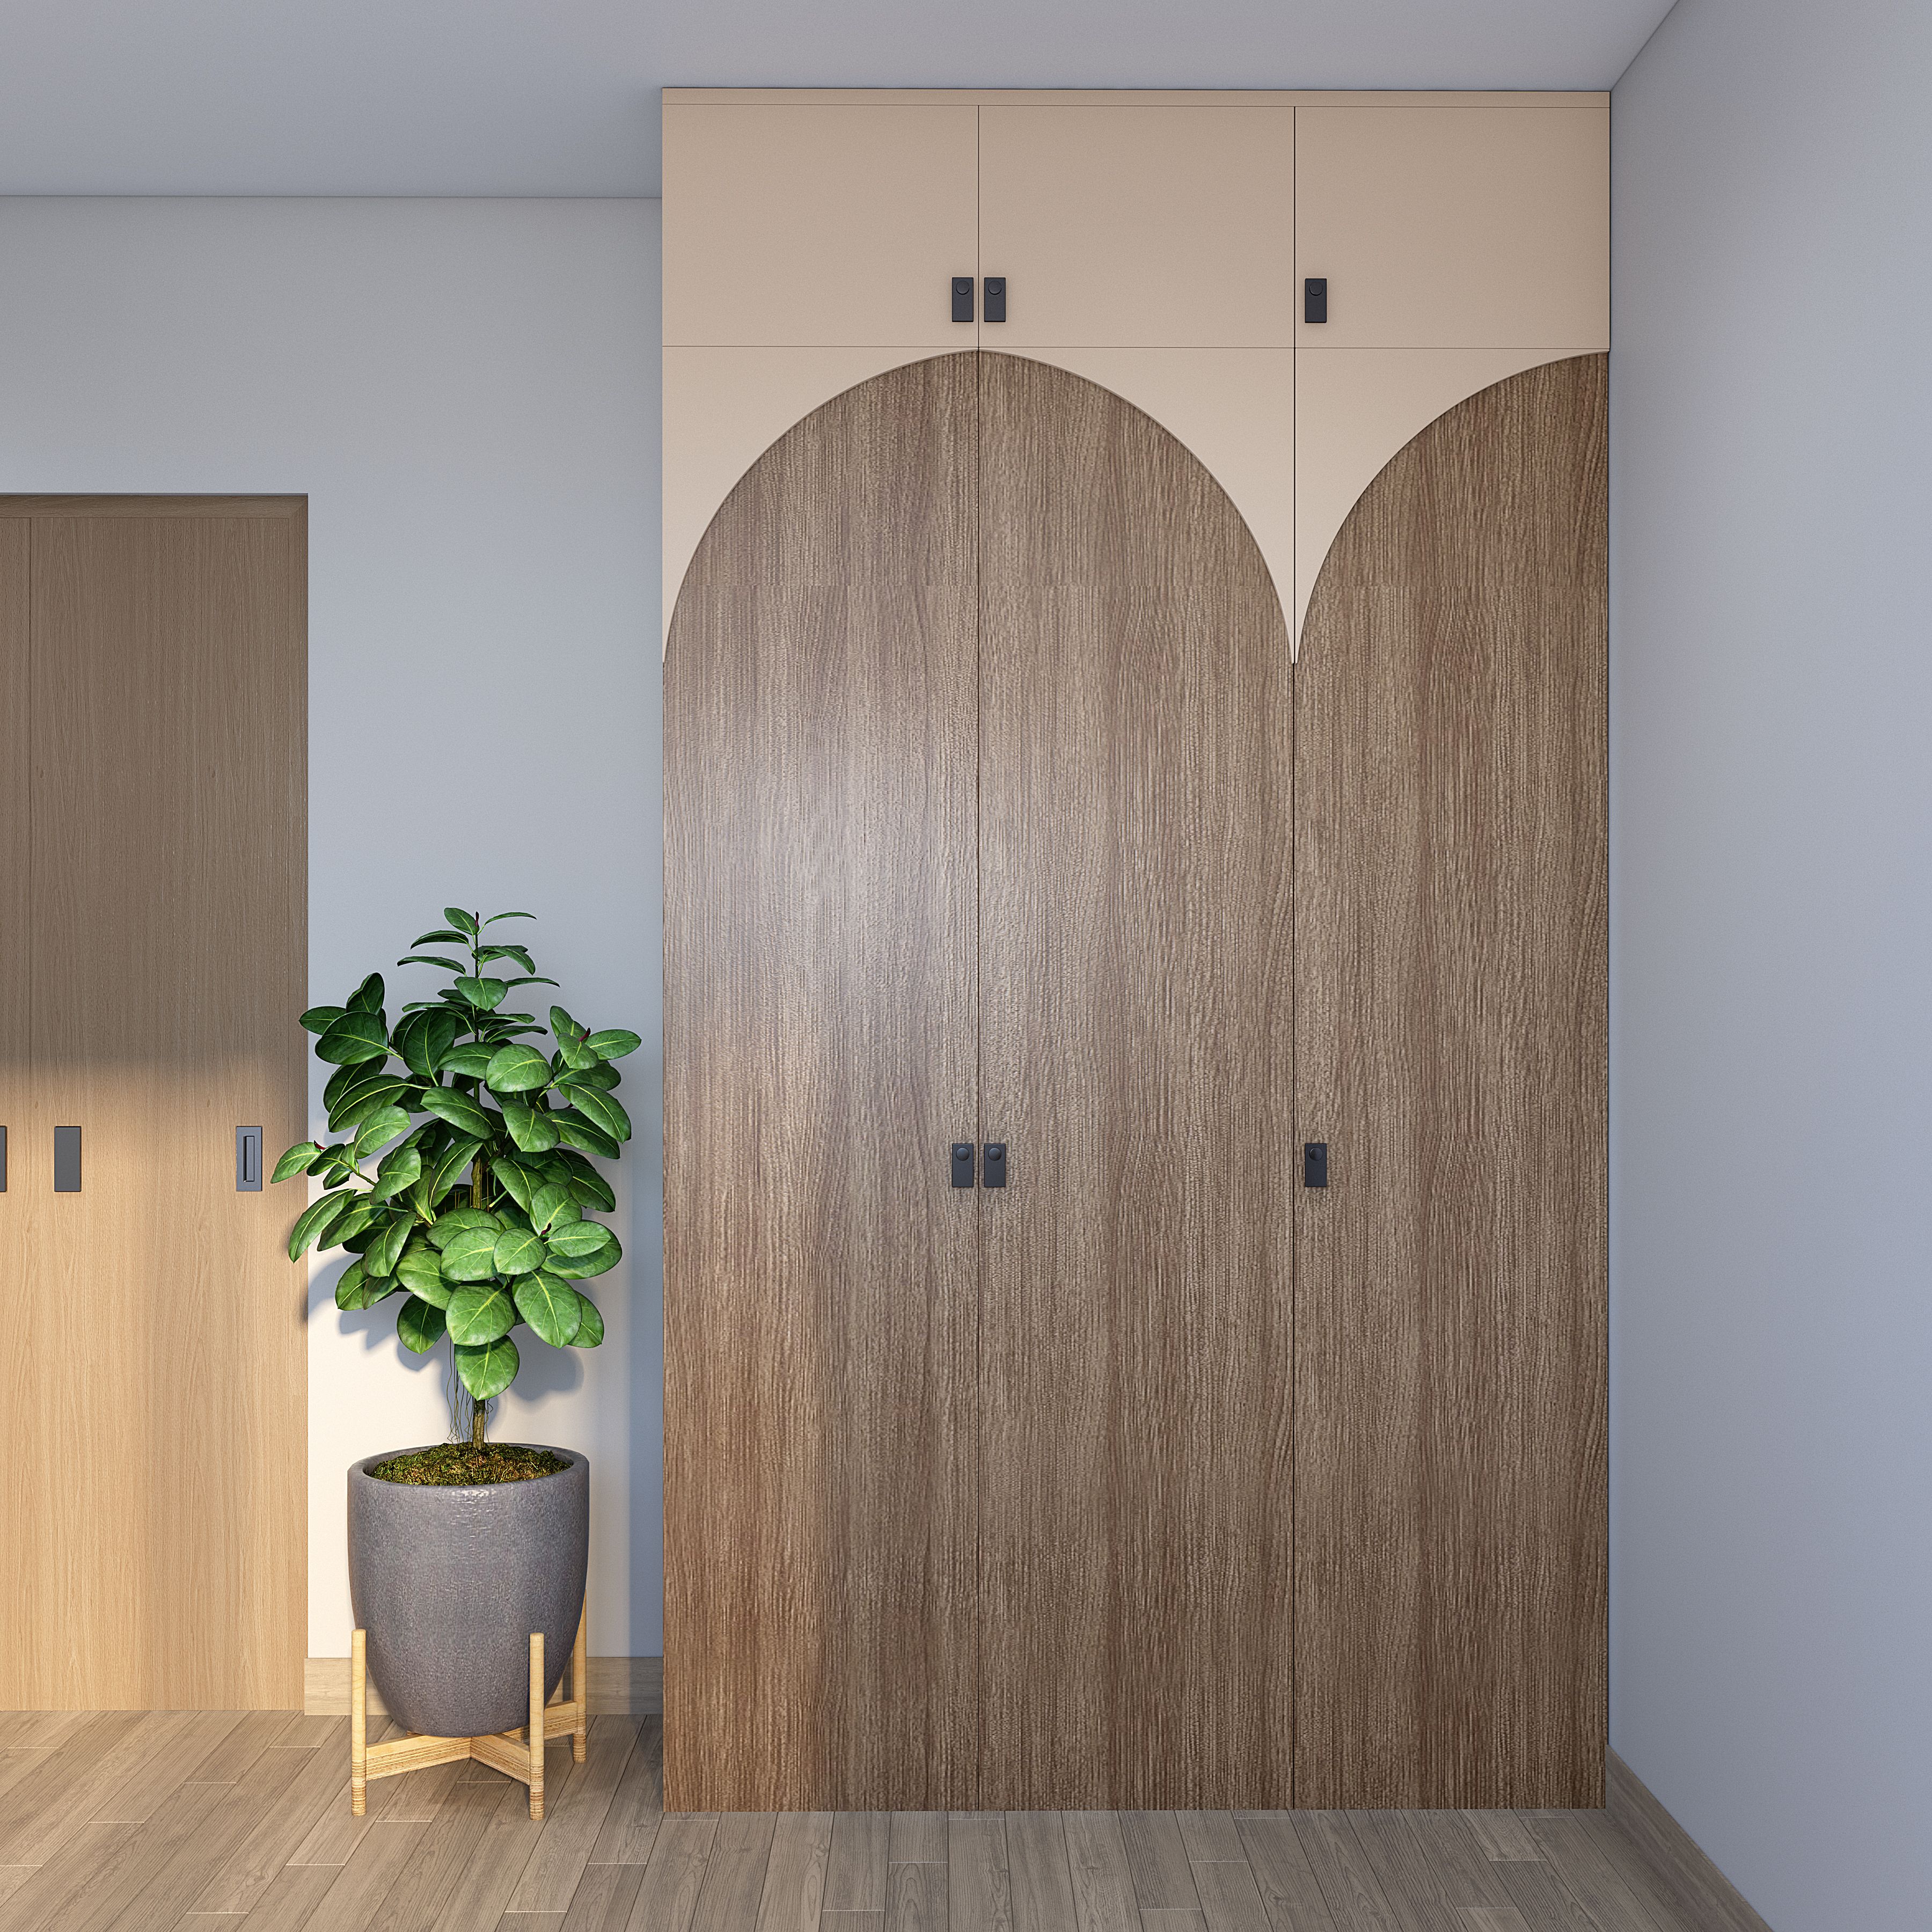 3-Door Contemporary Wardrobe Design With Loft Section